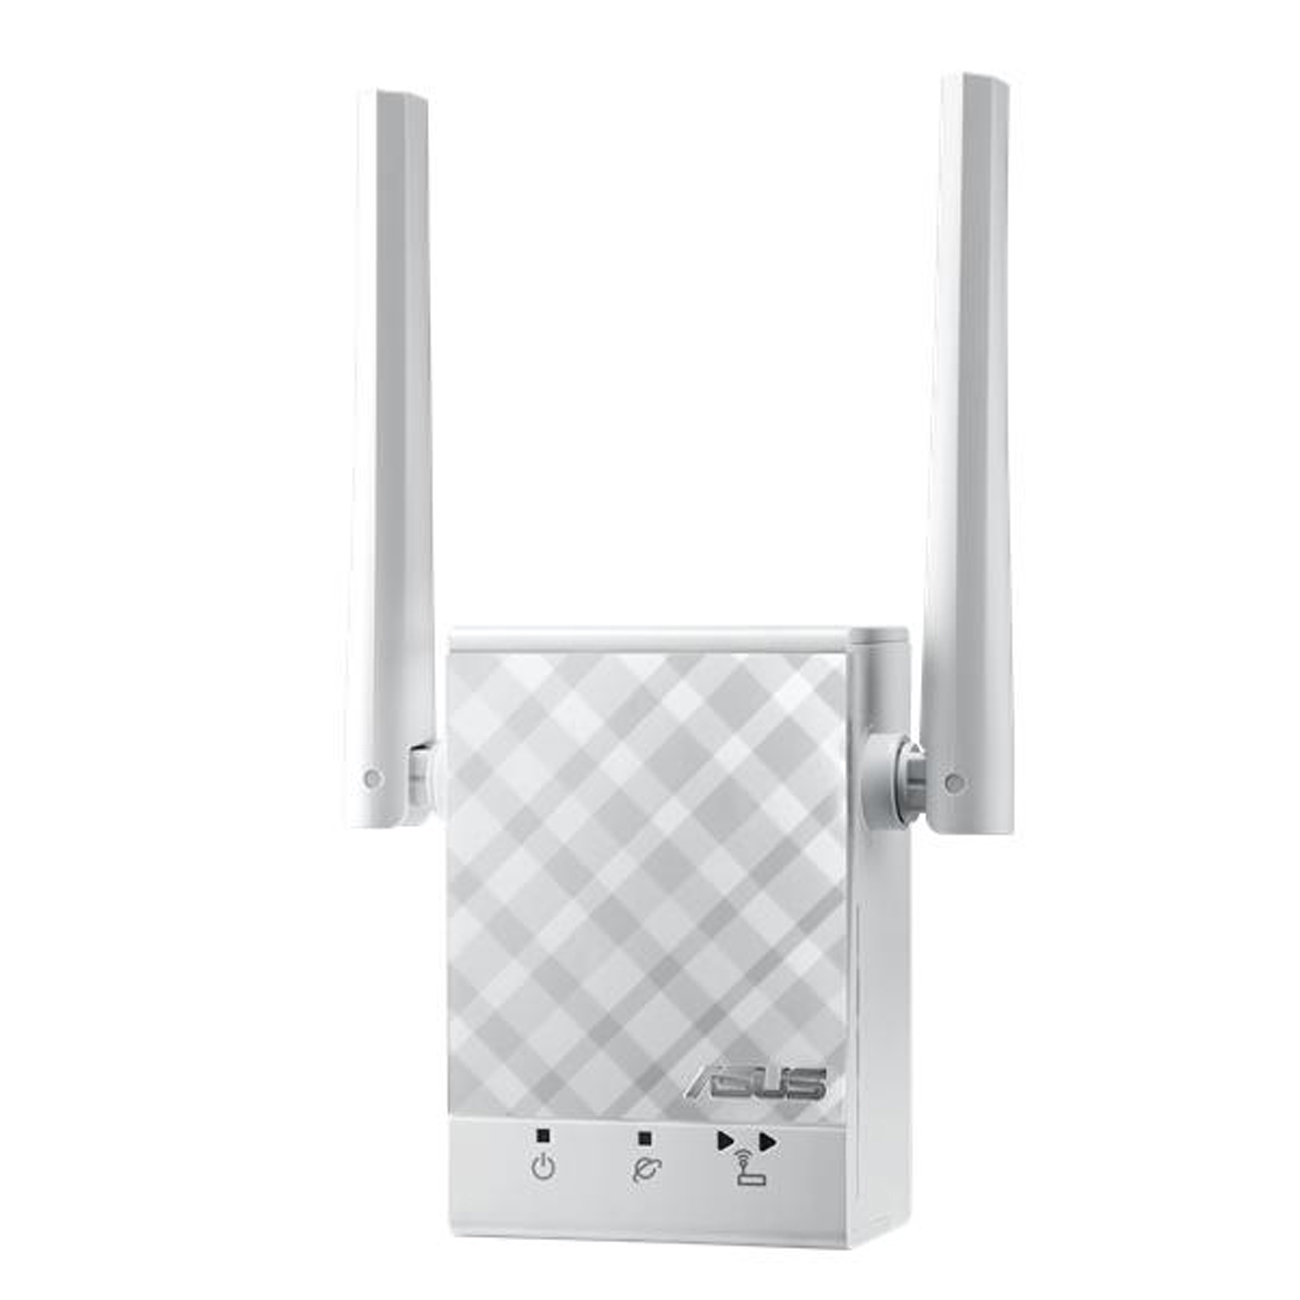 WiFi-5 AC750 RP-AC51 Repeater ASUS WLAN